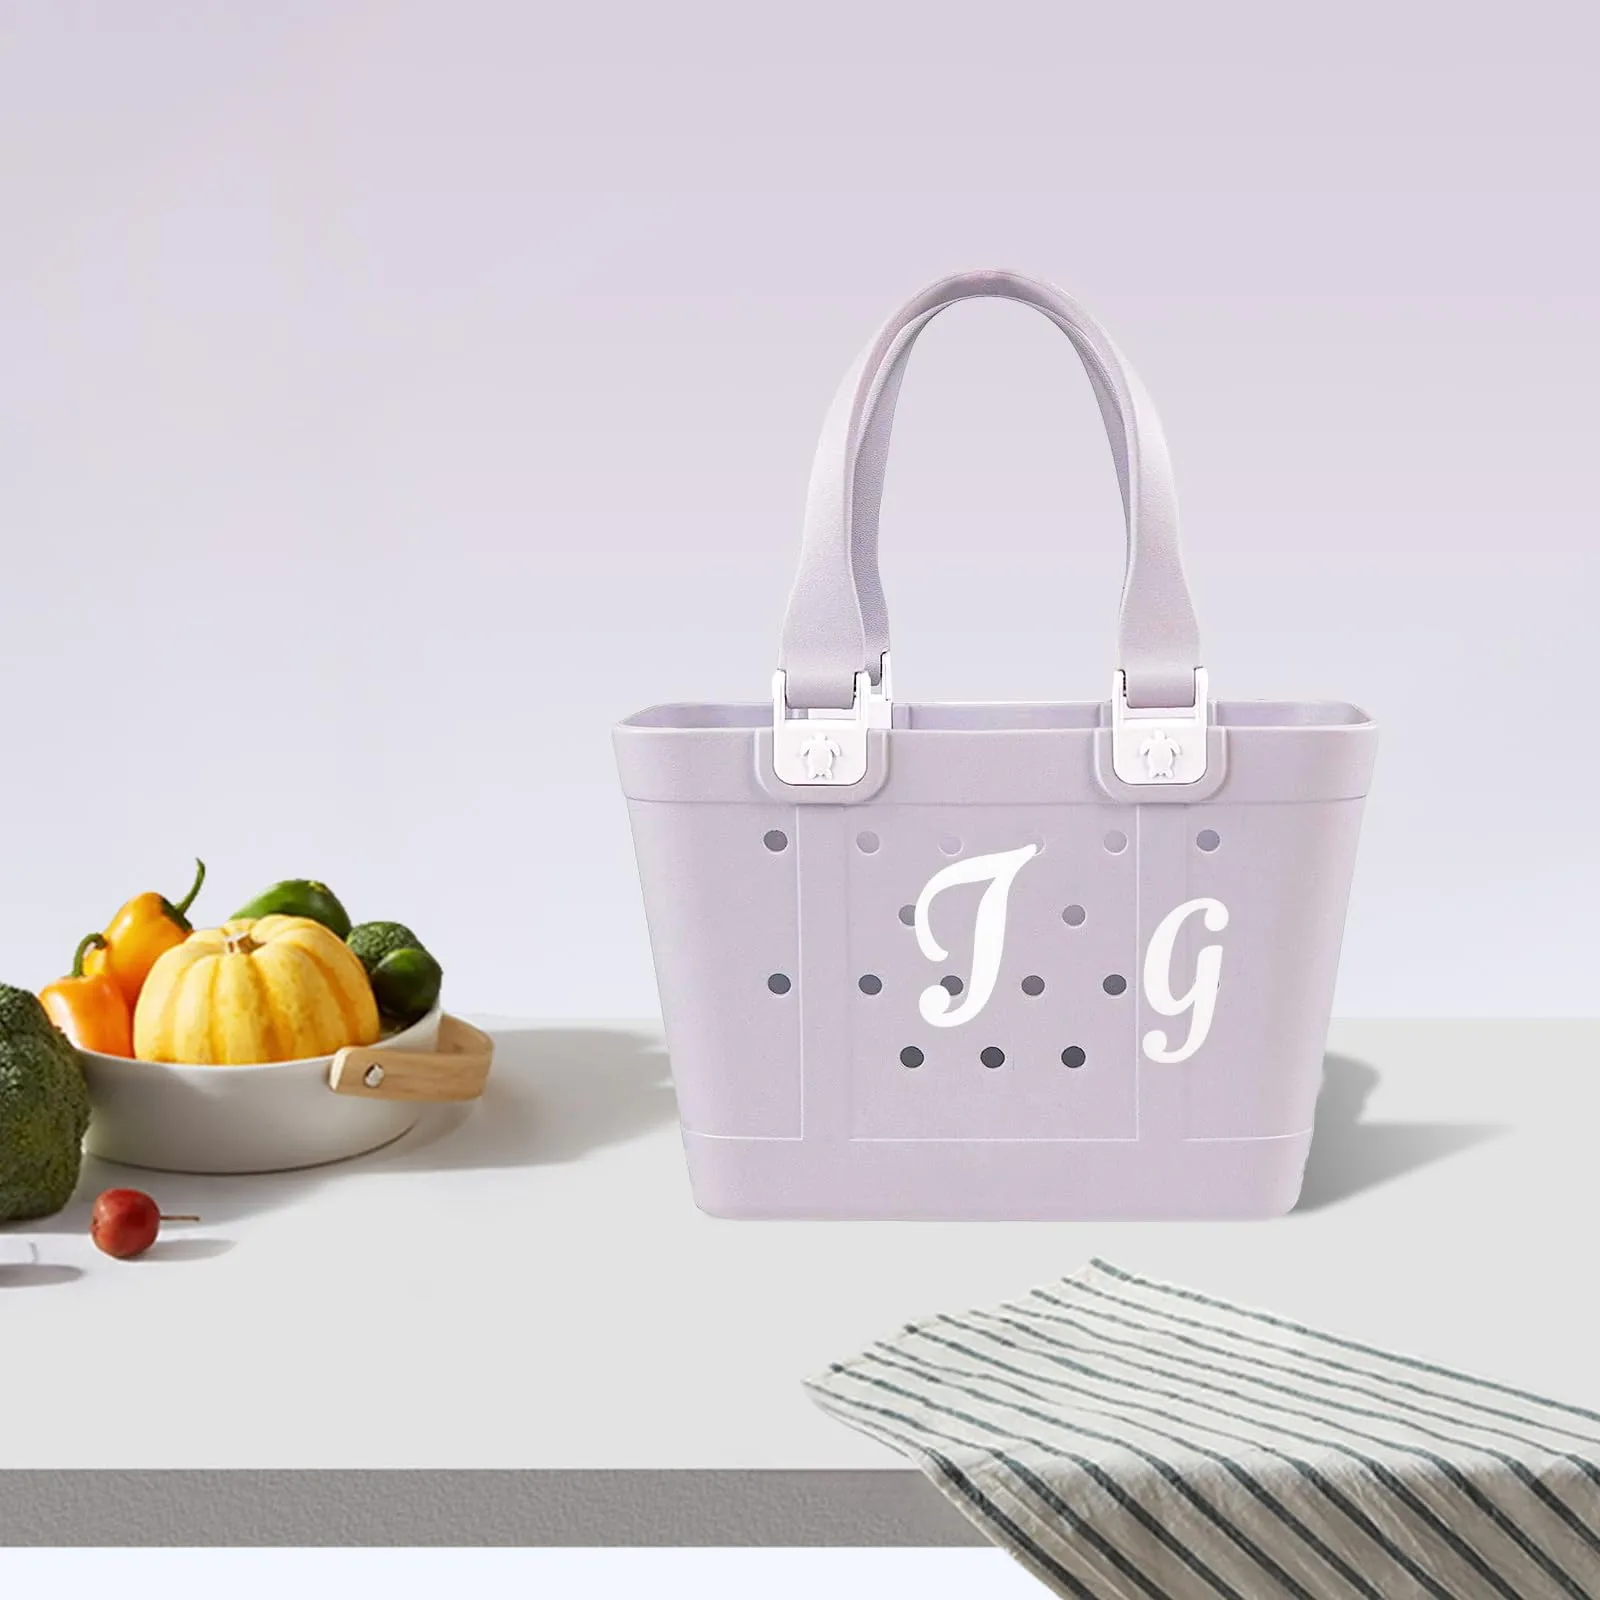 decorative lettering for bogg bag charm bogg bag accessories charm for diy personalizing handbag